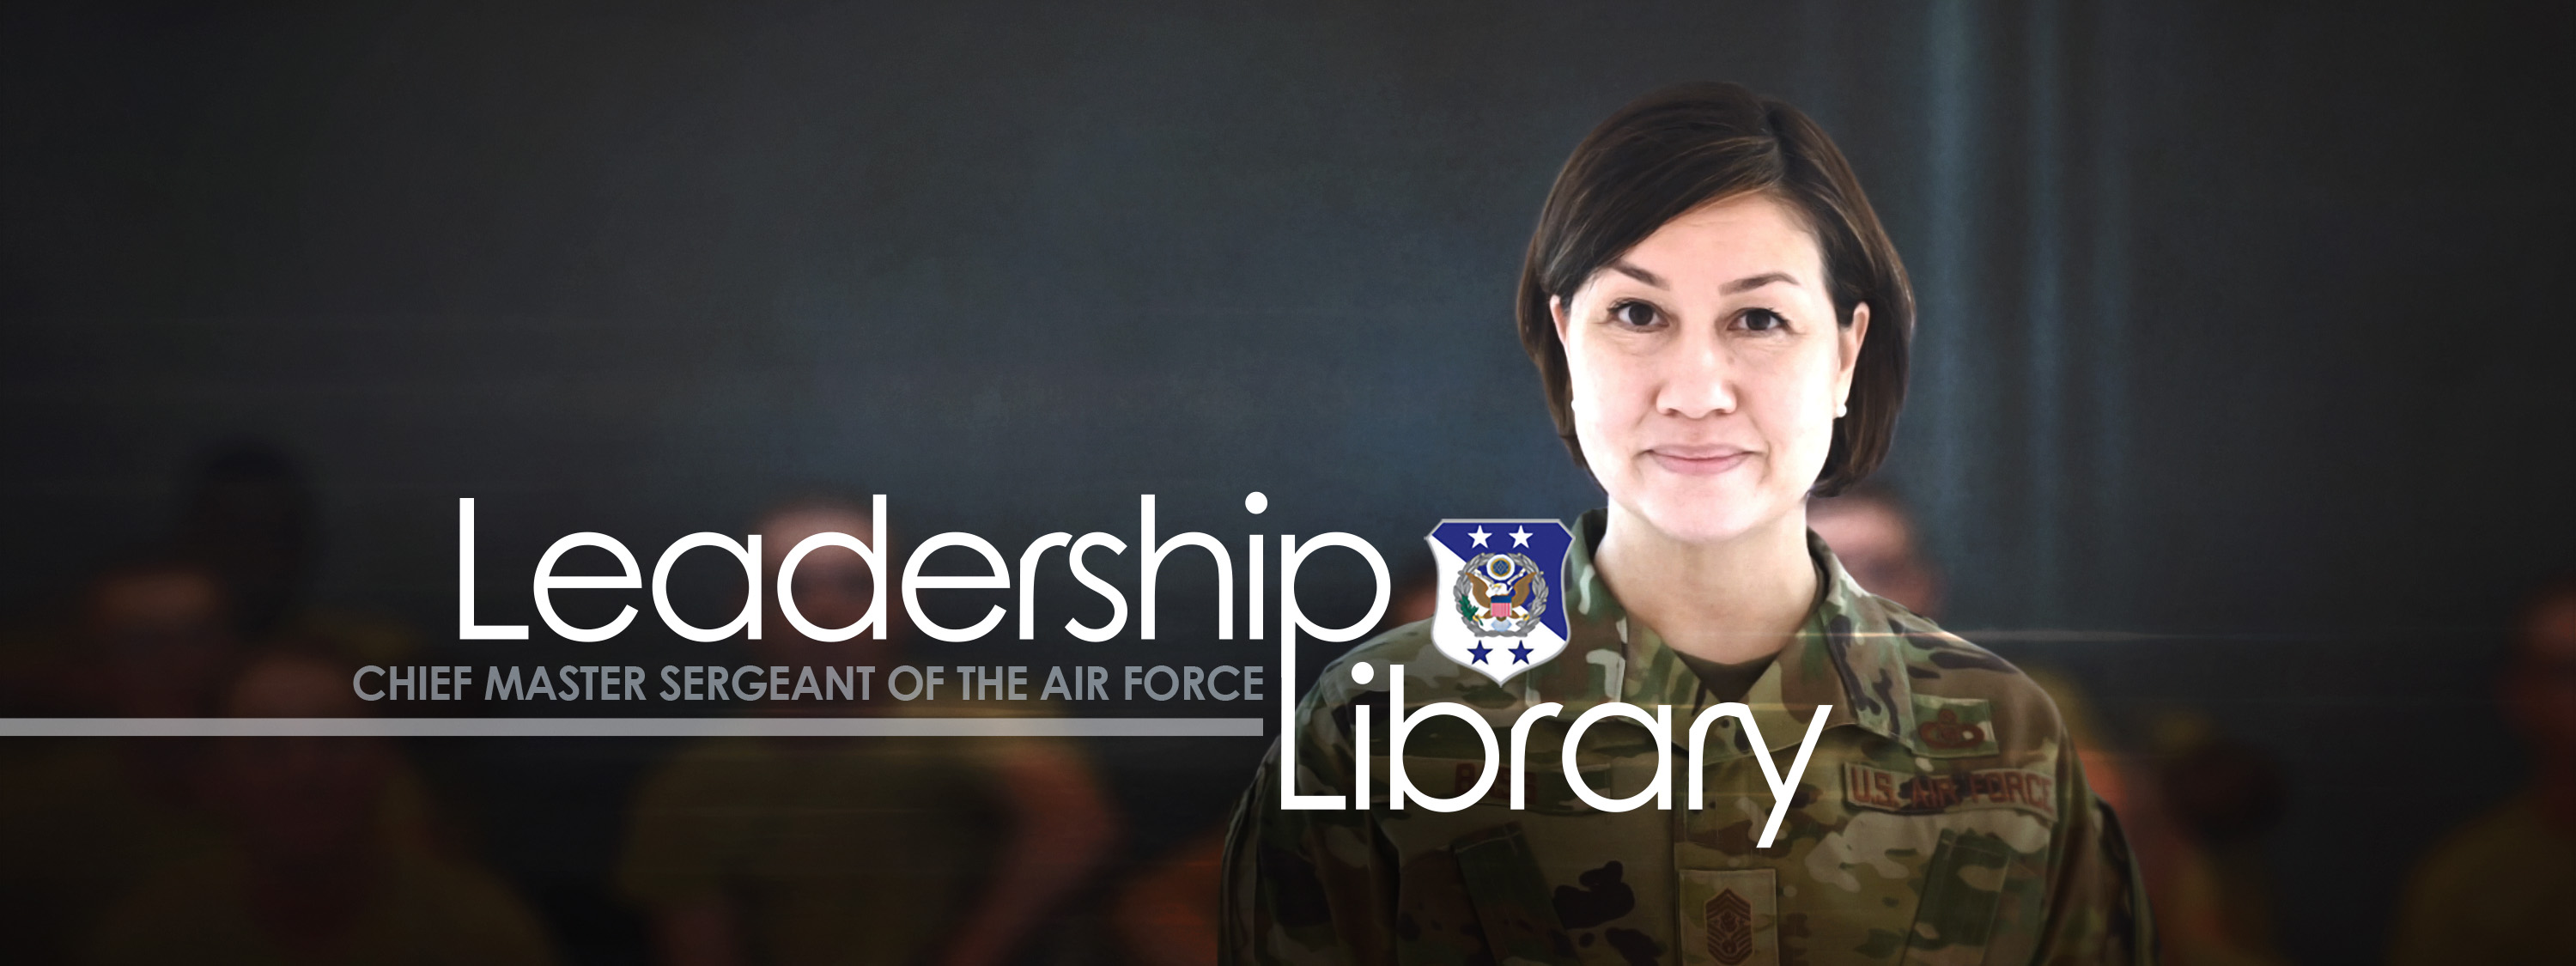 CMSAF Leadership Library Header Graphic